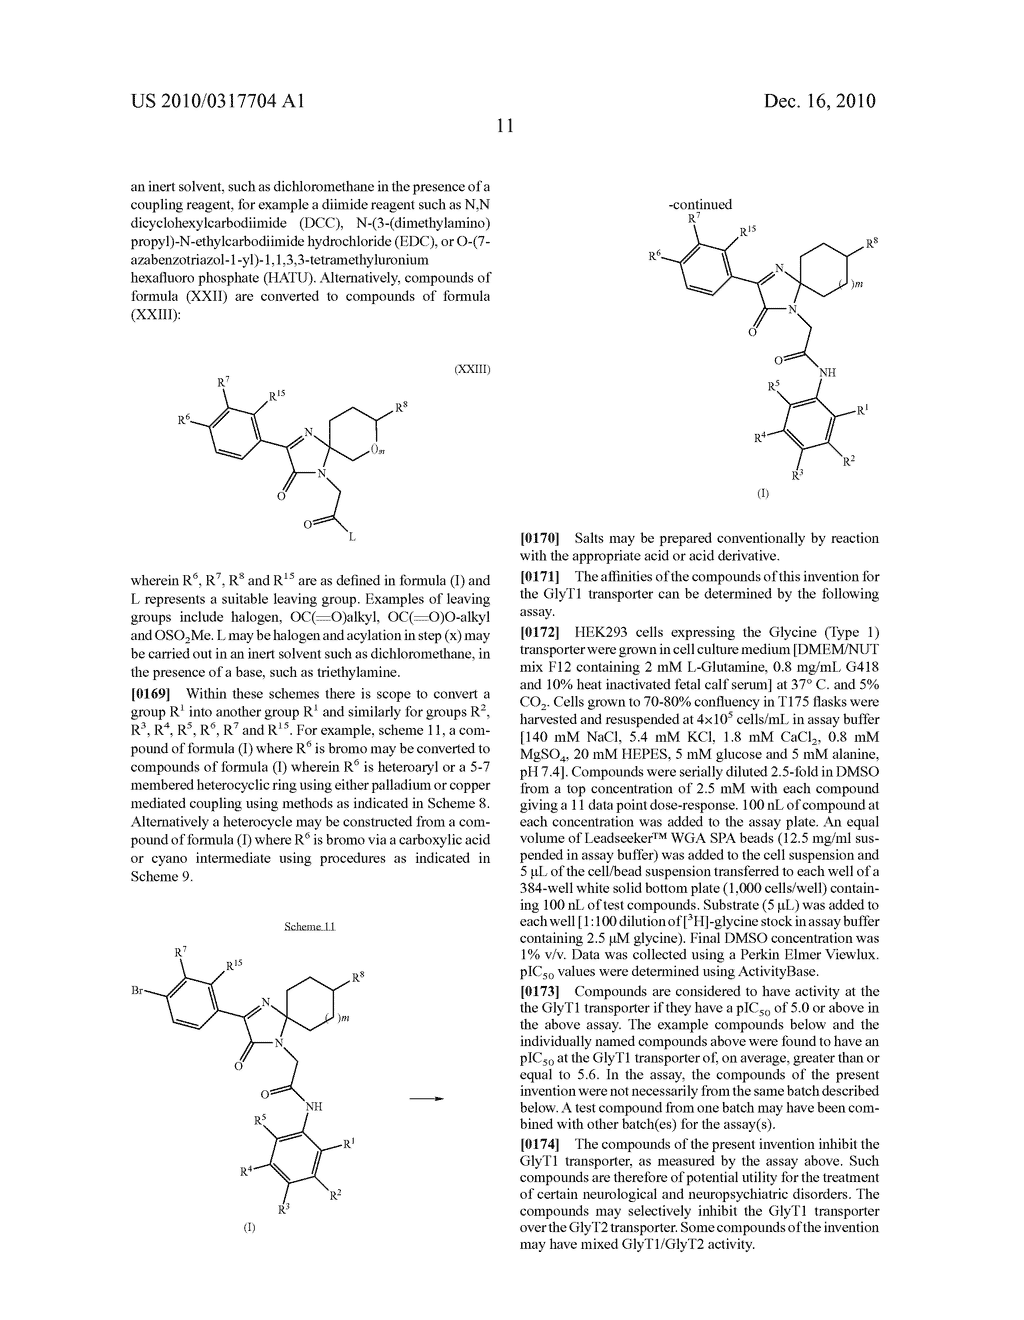 SPIRO-CONDENSED IMIDAZOLONE DERIVATIVES INHIBITING THE GLYCINE TRANSPORTER - diagram, schematic, and image 12